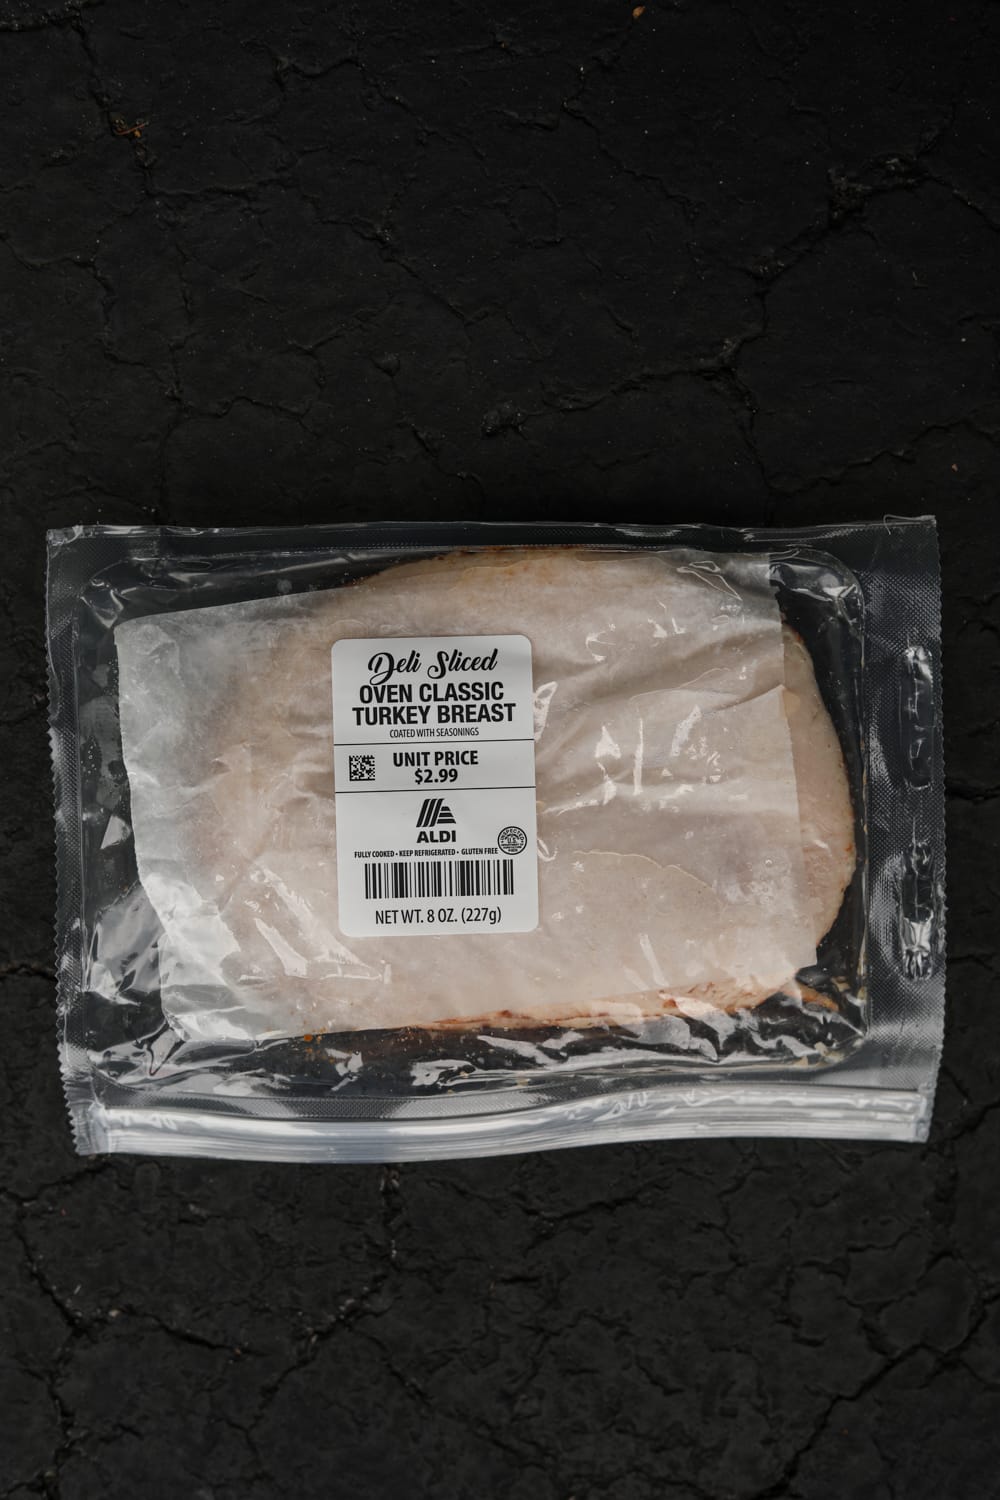 A bag of sliced deli turkey.